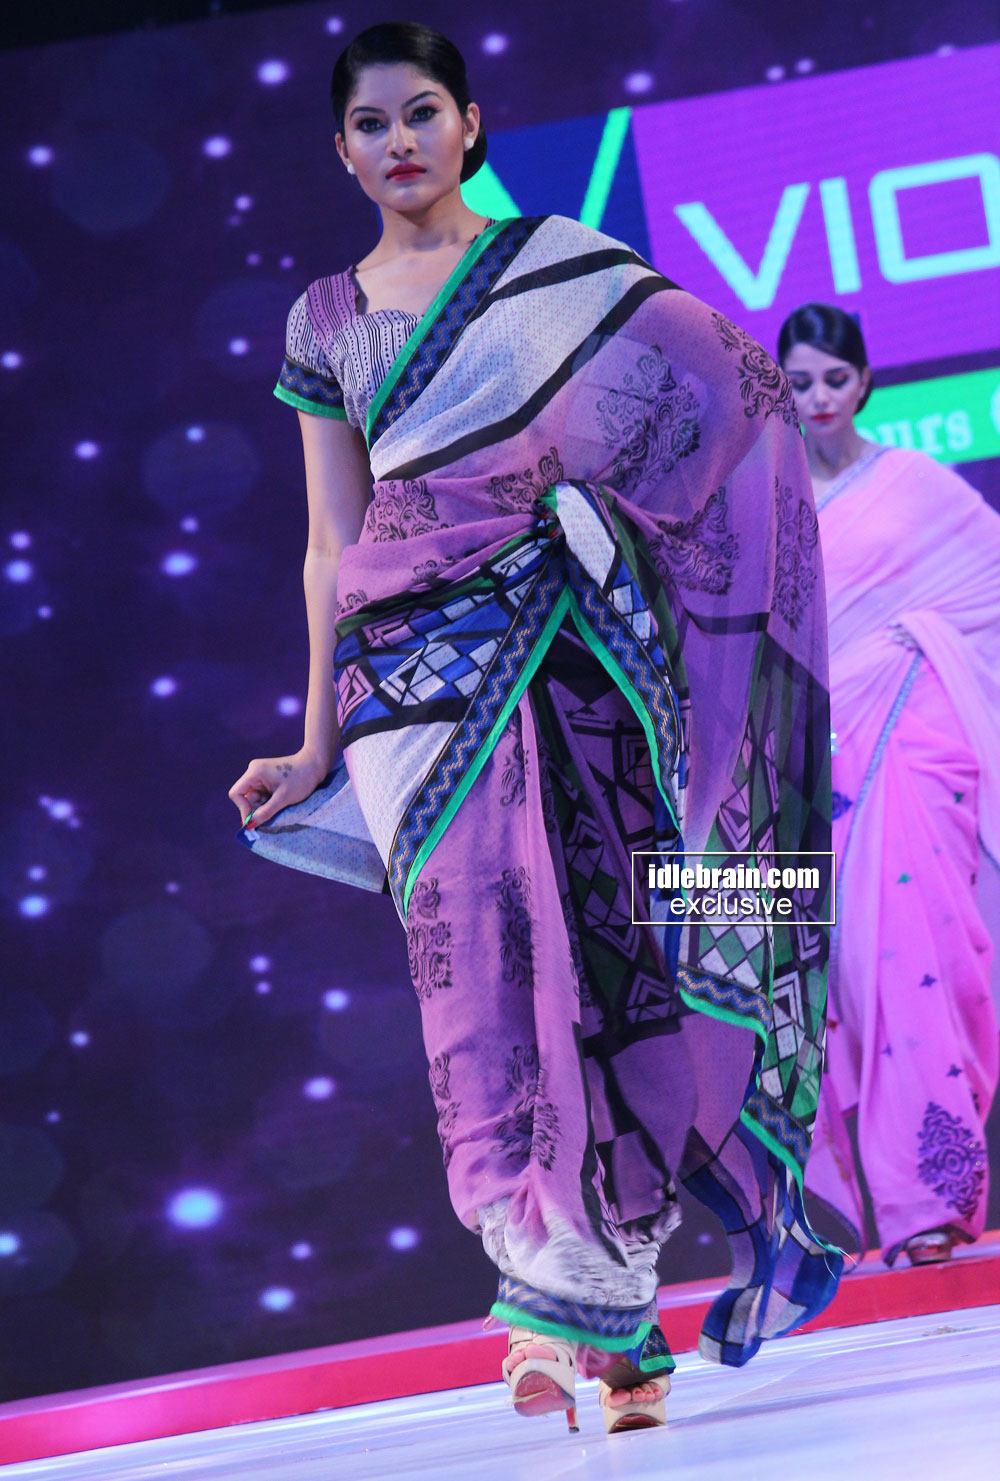 Surat Dreams fashion thrills fashion show - Telugu cinema